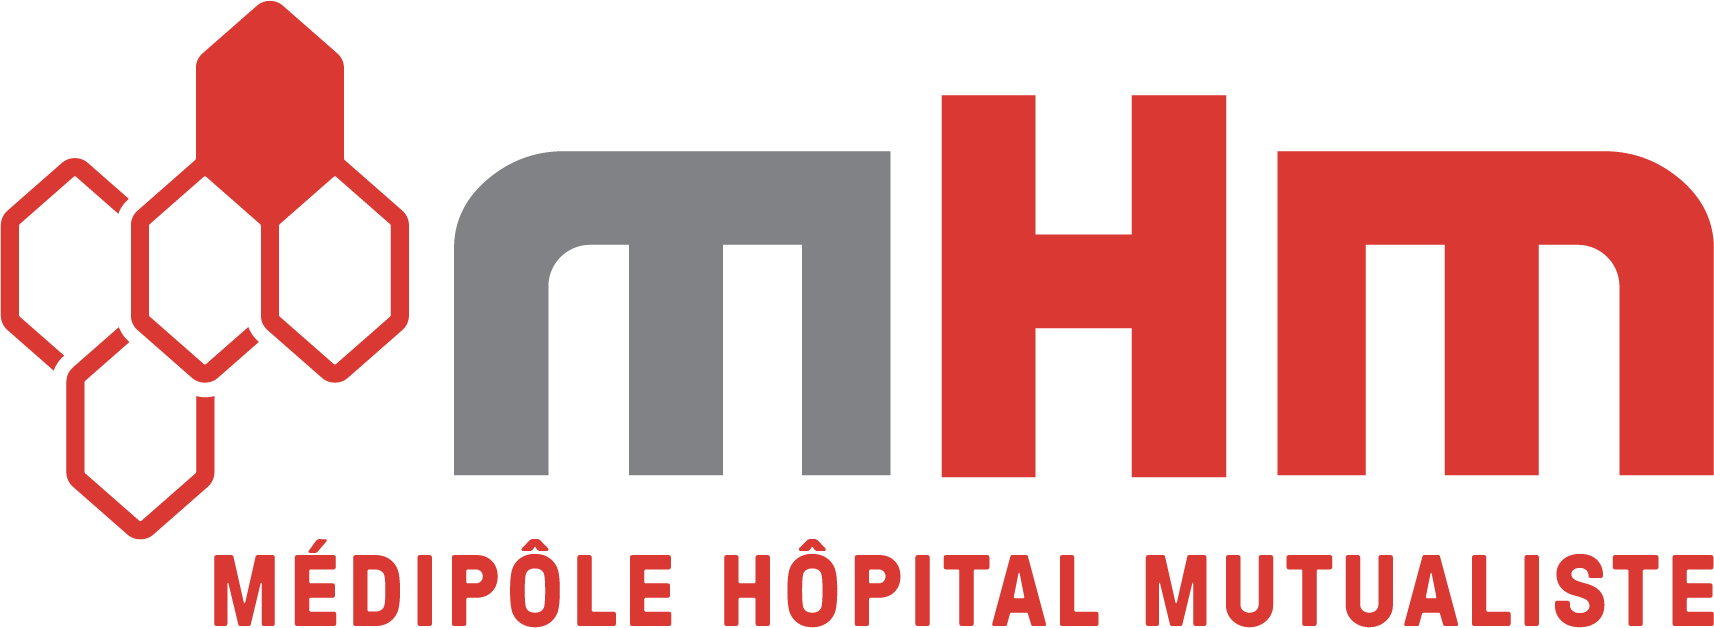 Médipôle Hôpital Mutualiste (MHM)